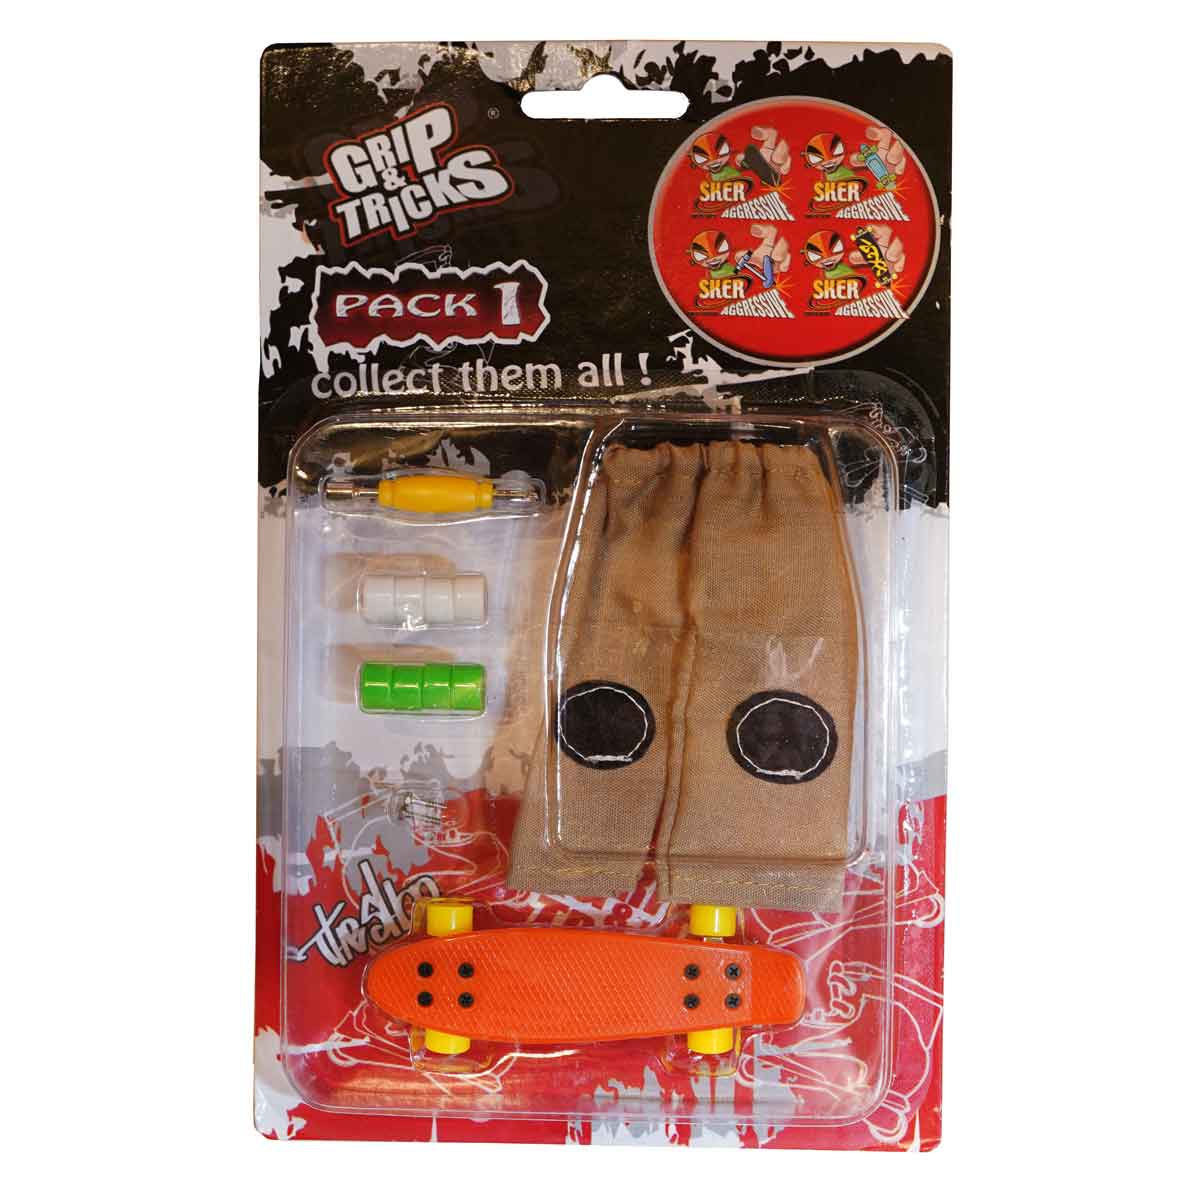 Grip & Tricks Комплект играчка за пръсти PENNY BOARD, оранжев